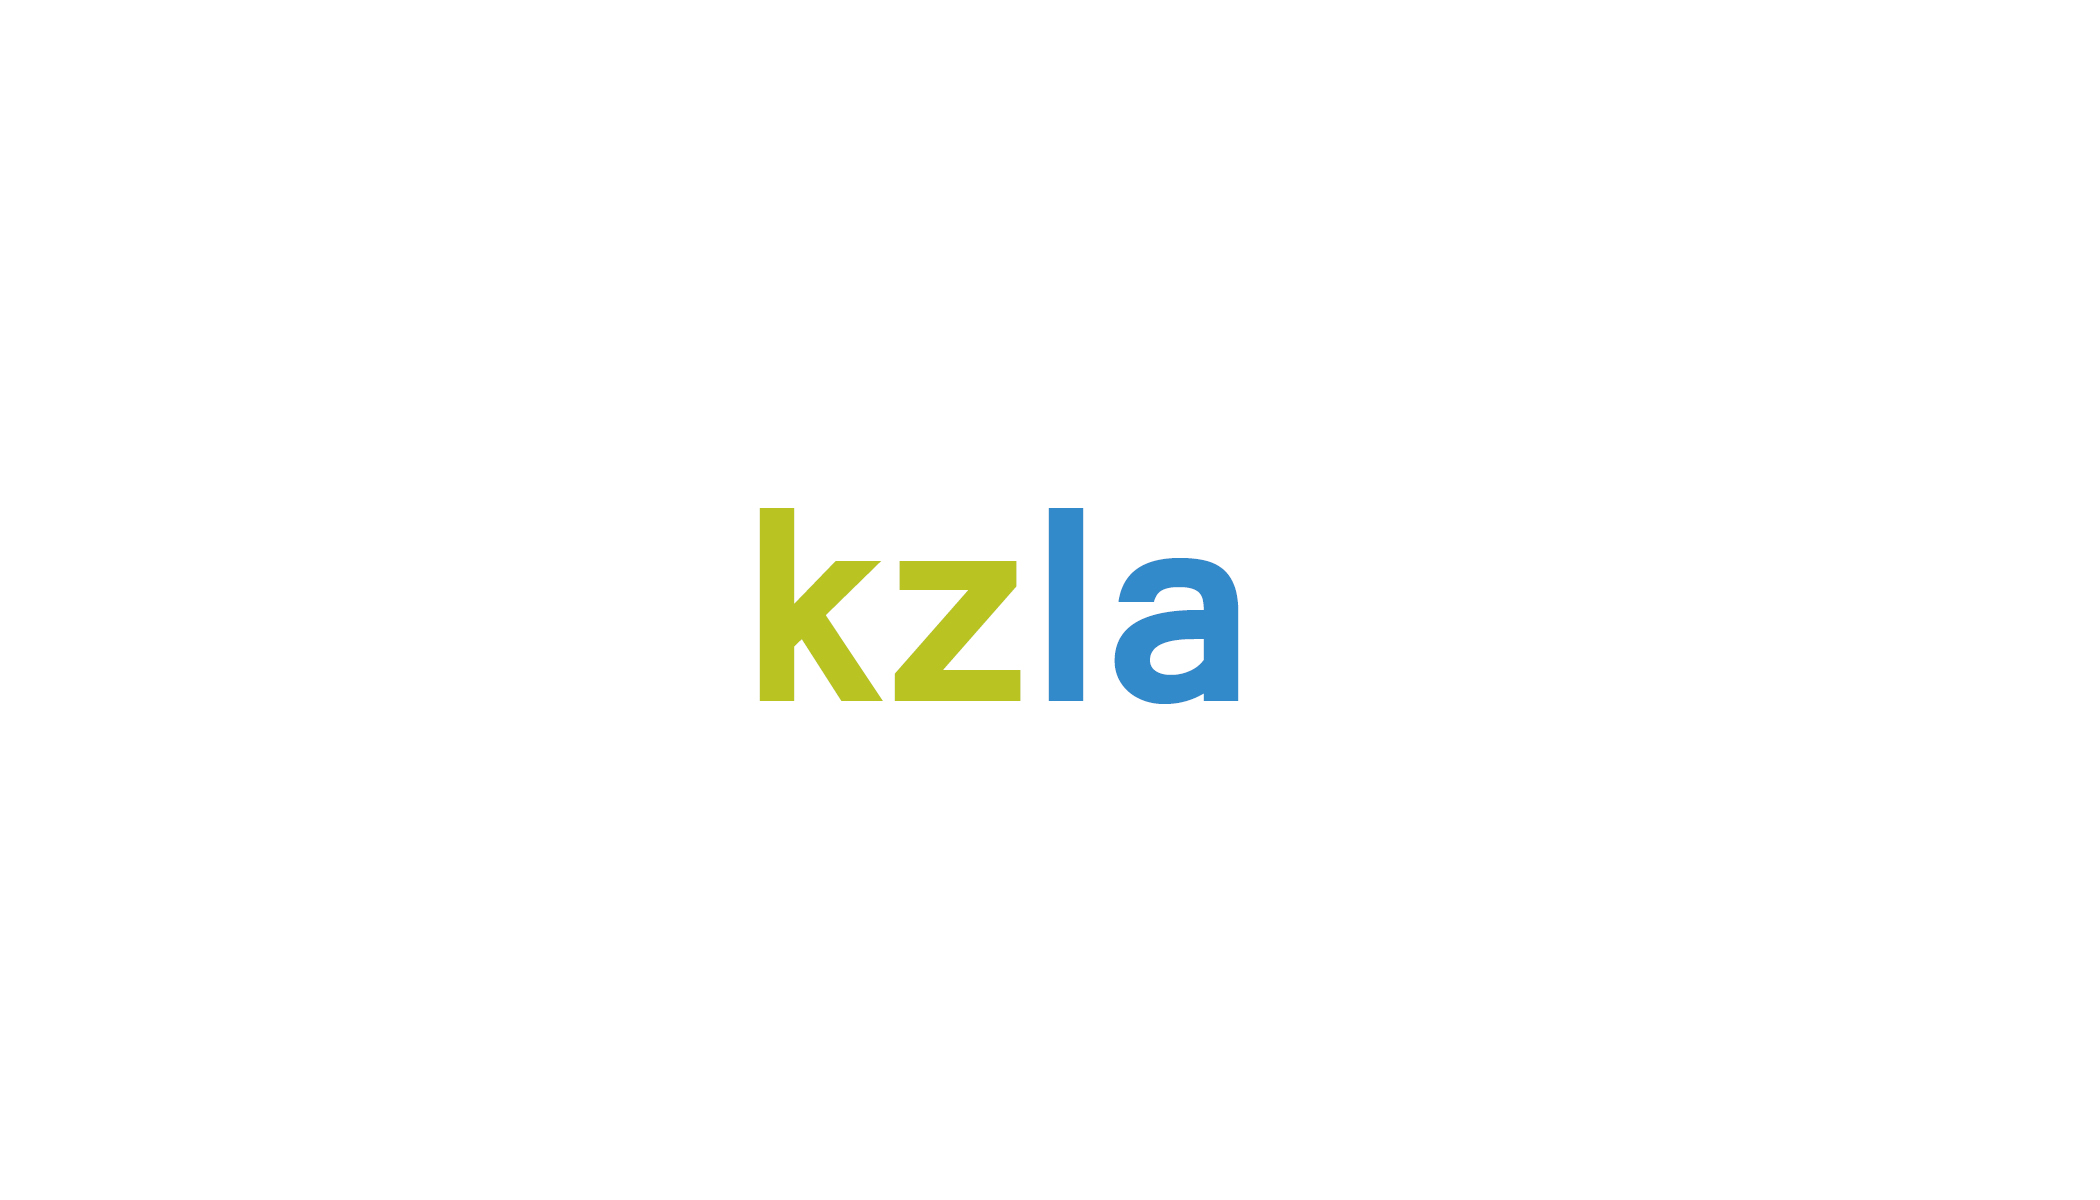 KZLA Logo